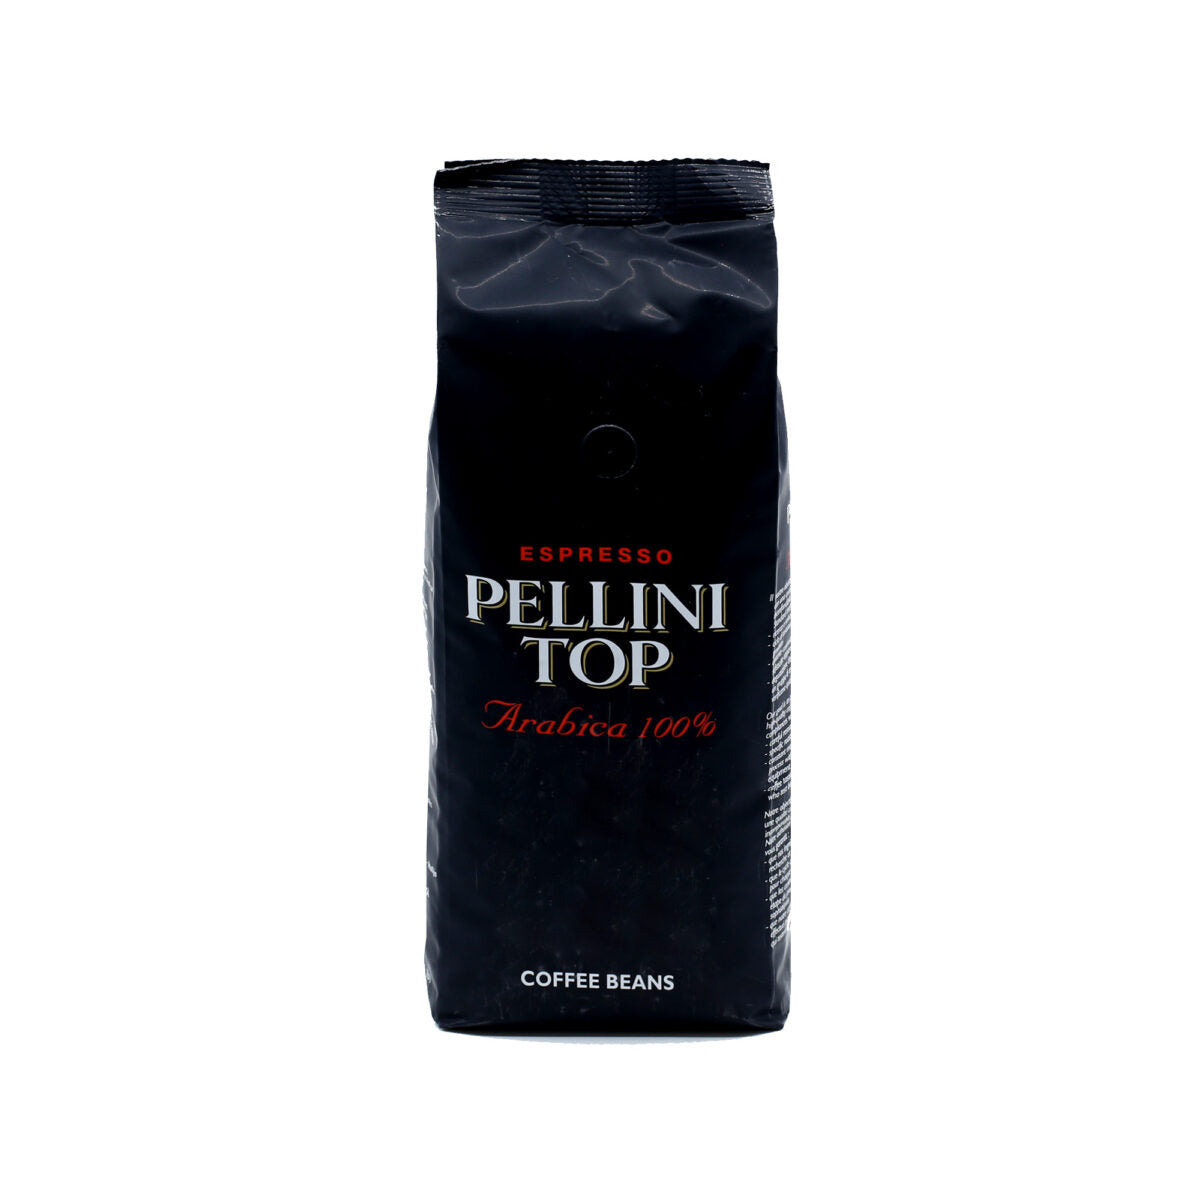 Pellini Top 100% Arabica Coffee Beans 500g (17.64oz) - Aster Premium